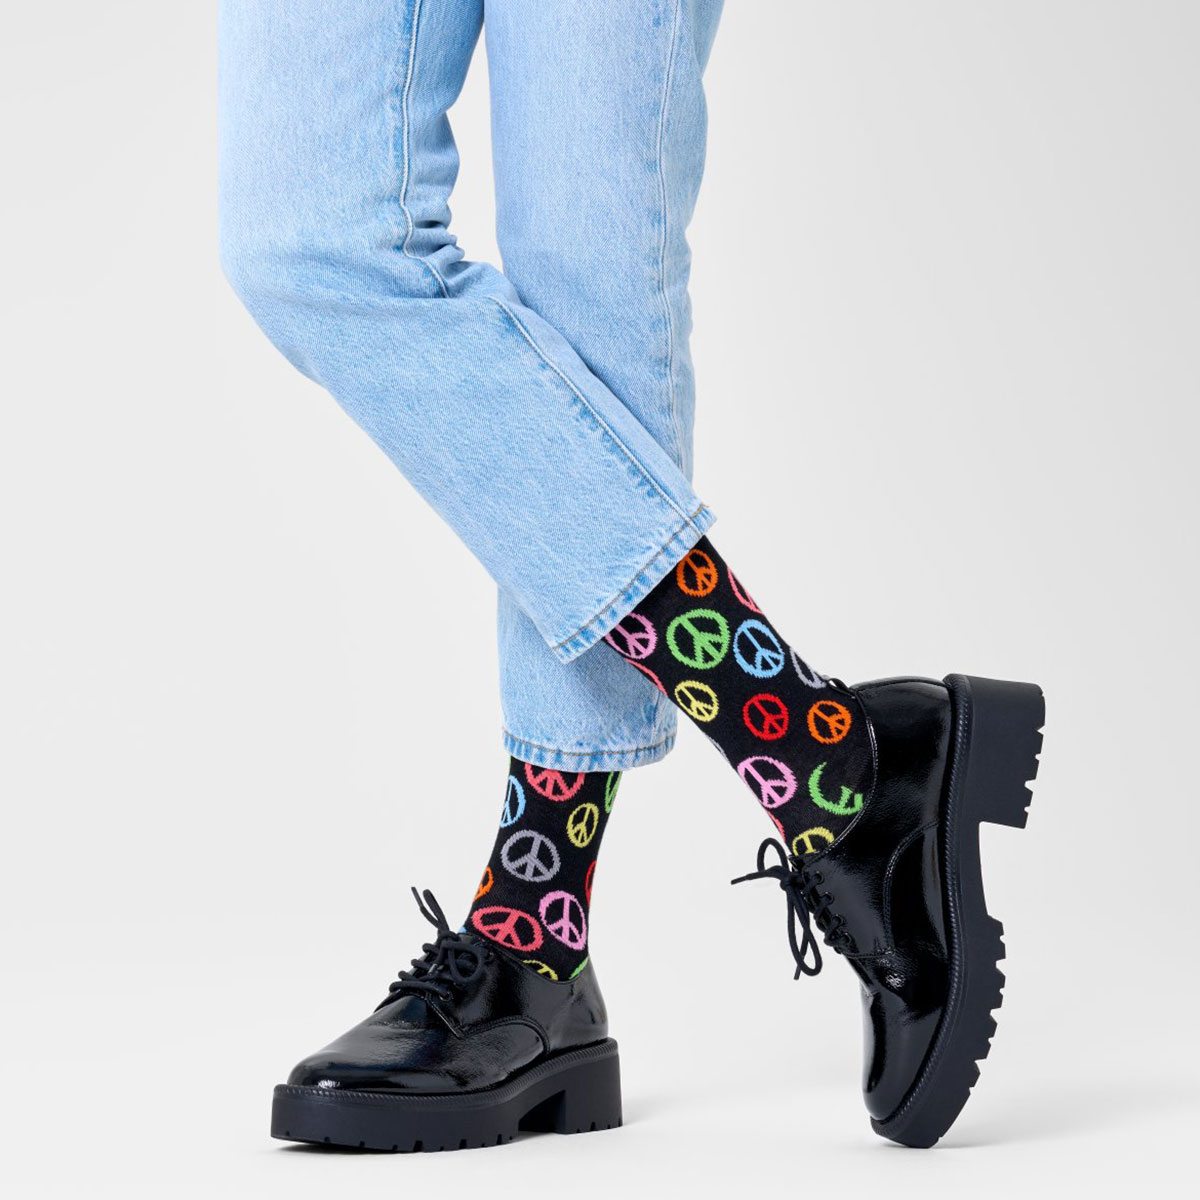 【24SS】Happy Socks ハッピーソックス Peace ( ピース ) クルー丈 ソックス ユニセックス メンズ ＆ レディース 靴下10240062